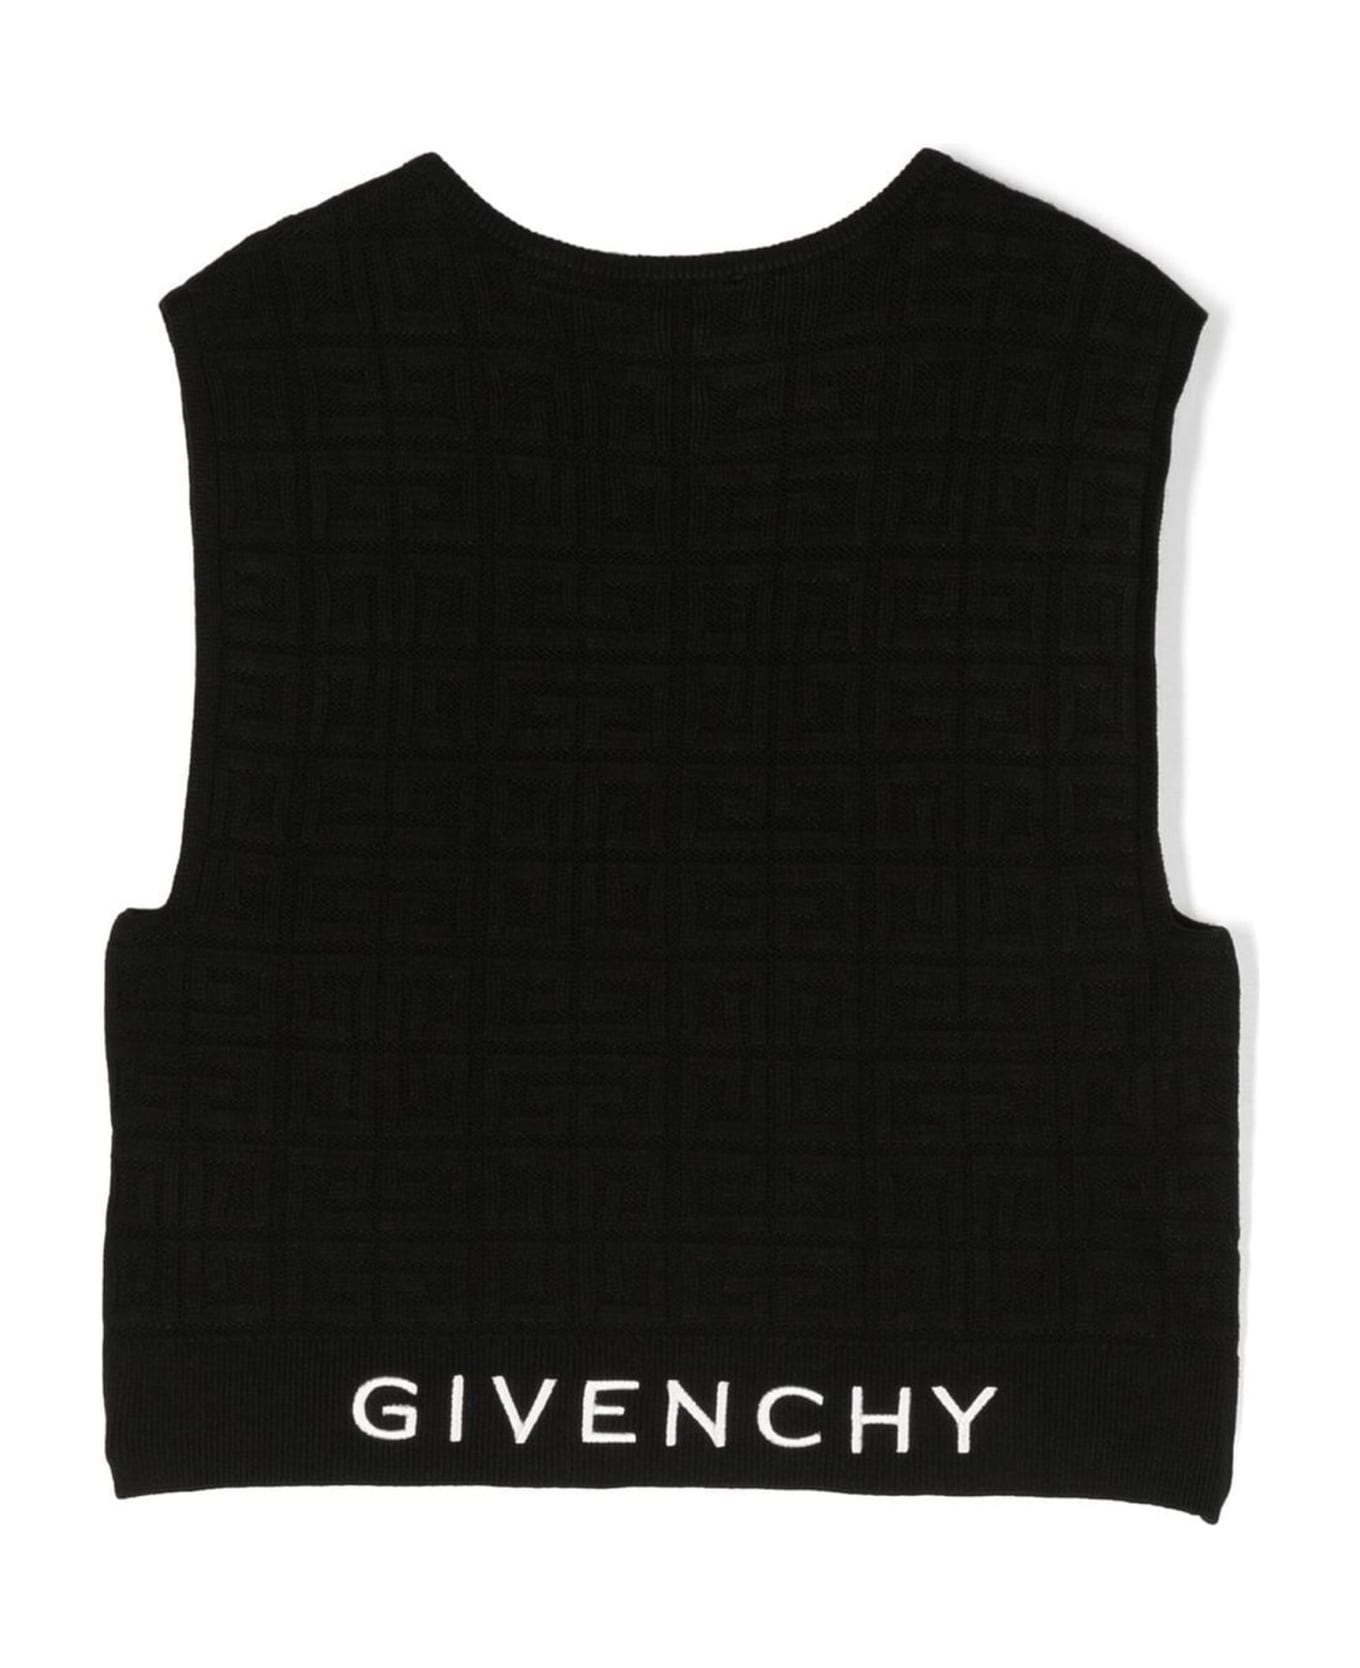 Givenchy Black Viscose Top - Nero